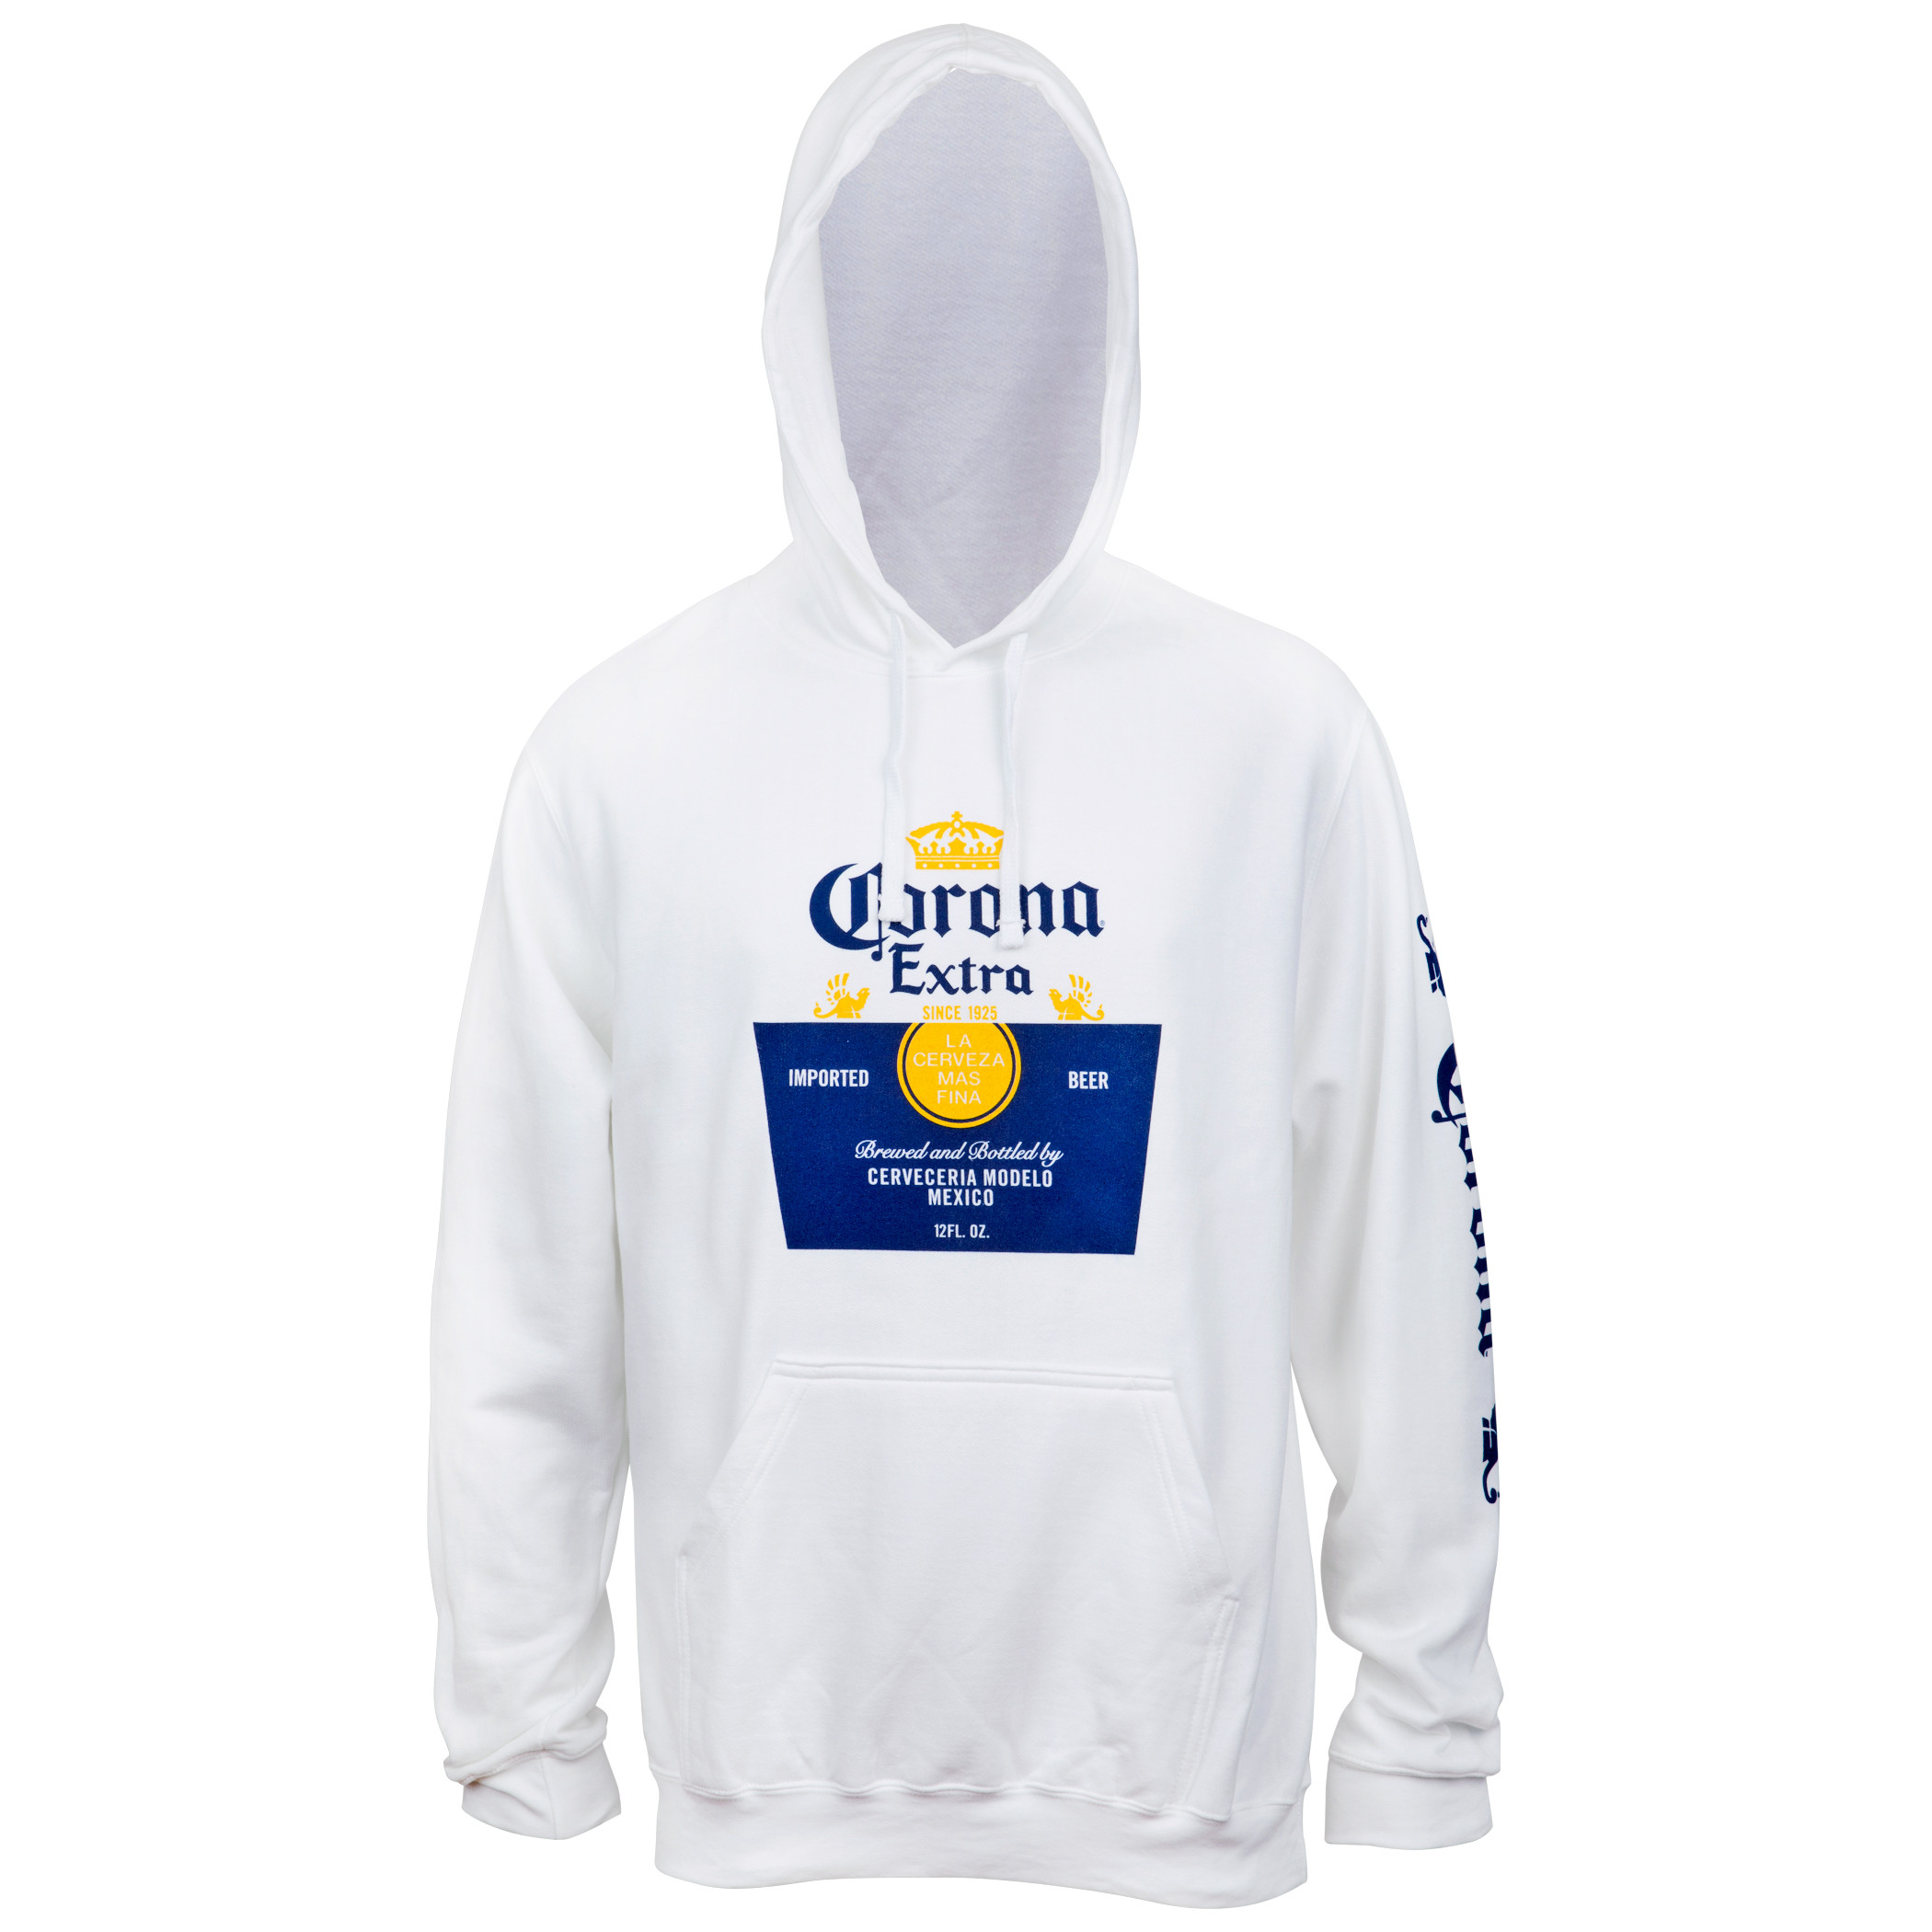 Corona Extra Beer Label White Hooded Sweatshirt With Sleeve Print